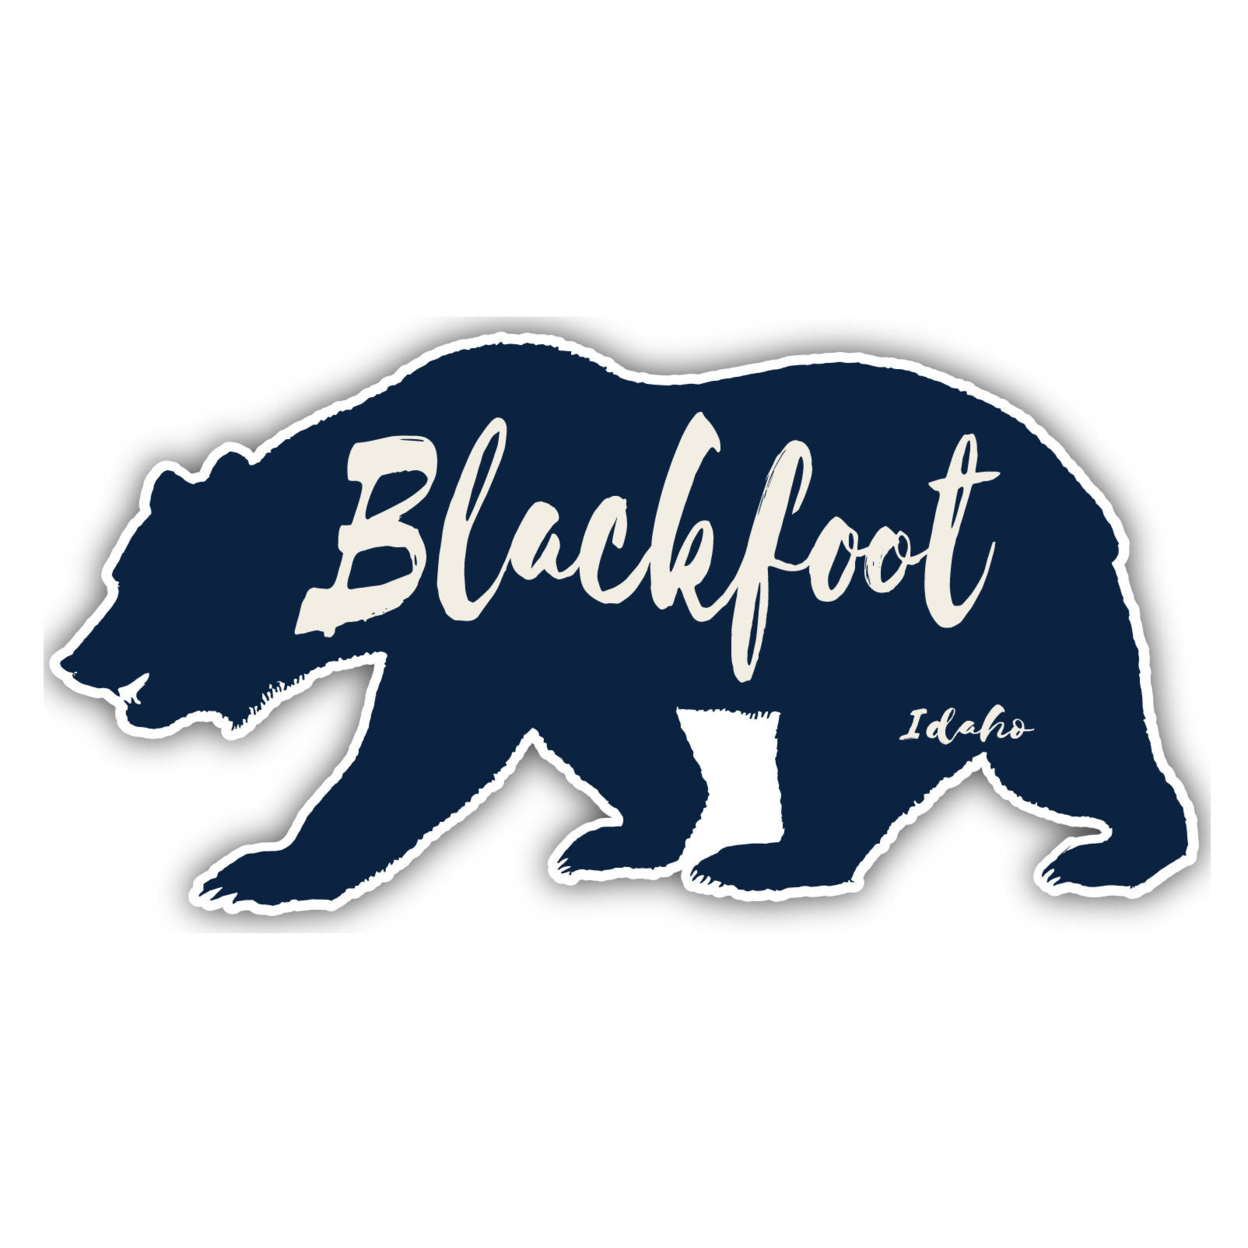 Blackfoot Idaho Souvenir Decorative Stickers (Choose Theme And Size) - Single Unit, 10-Inch, Bear